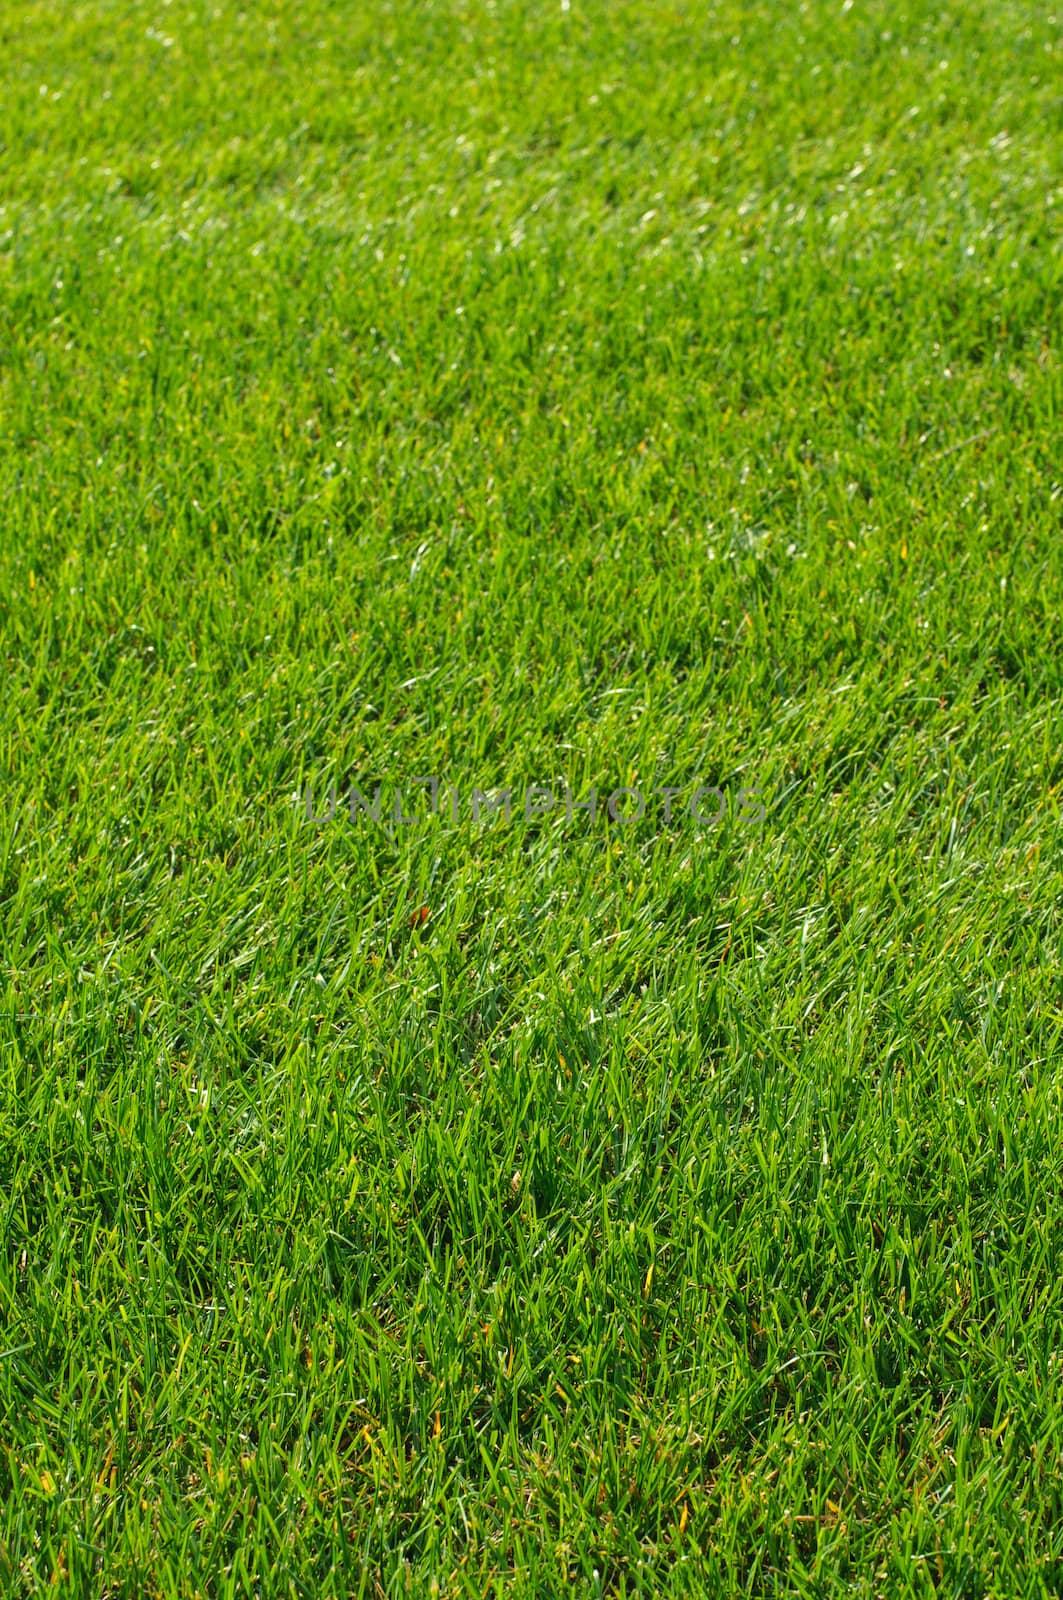 Green grass texture by nvelichko